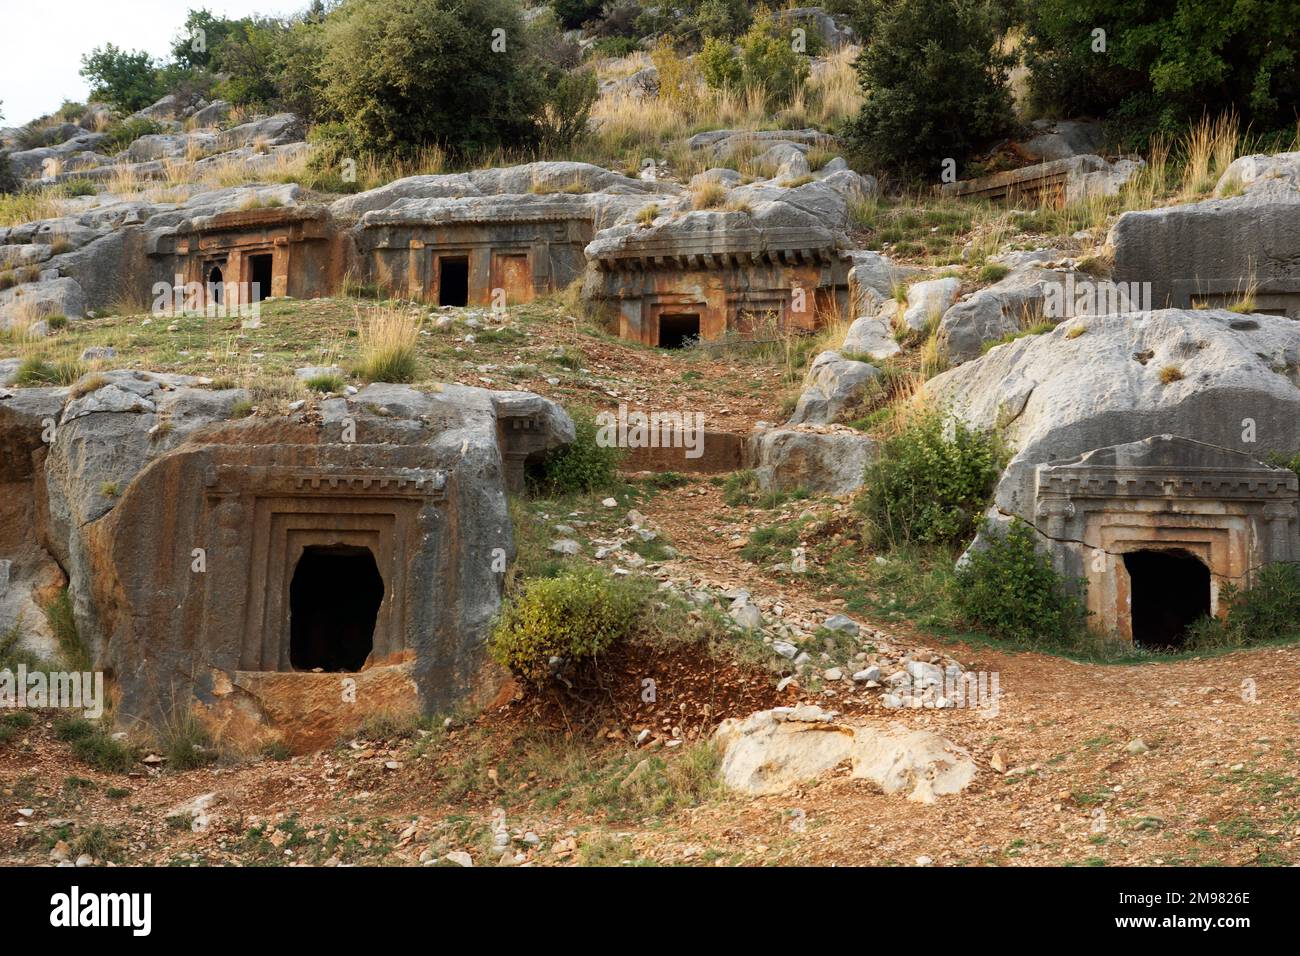 Turchia, Lykia, Limyra: Tombe di roccia (4th ° secolo AC) Foto Stock